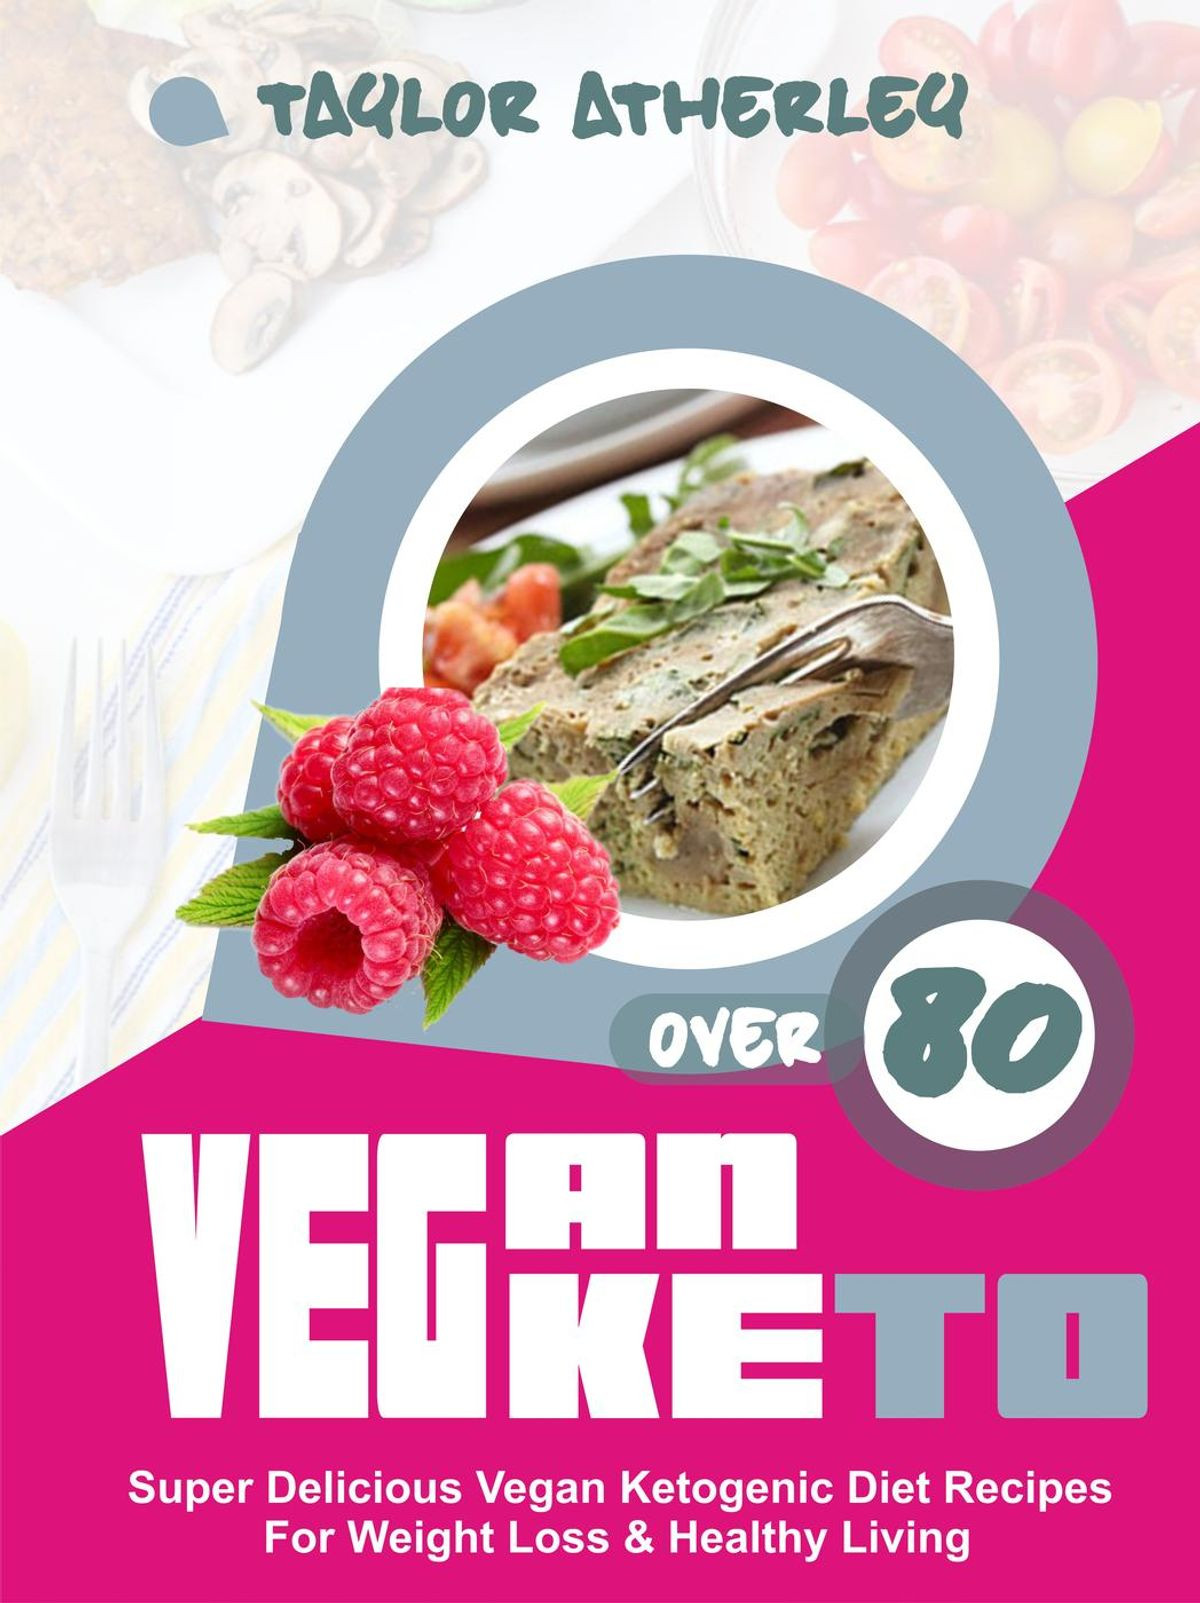 Vegan Keto Diet Recipes
 Vegan Keto 80 Super Delicious Vegan Ketogenic Diet